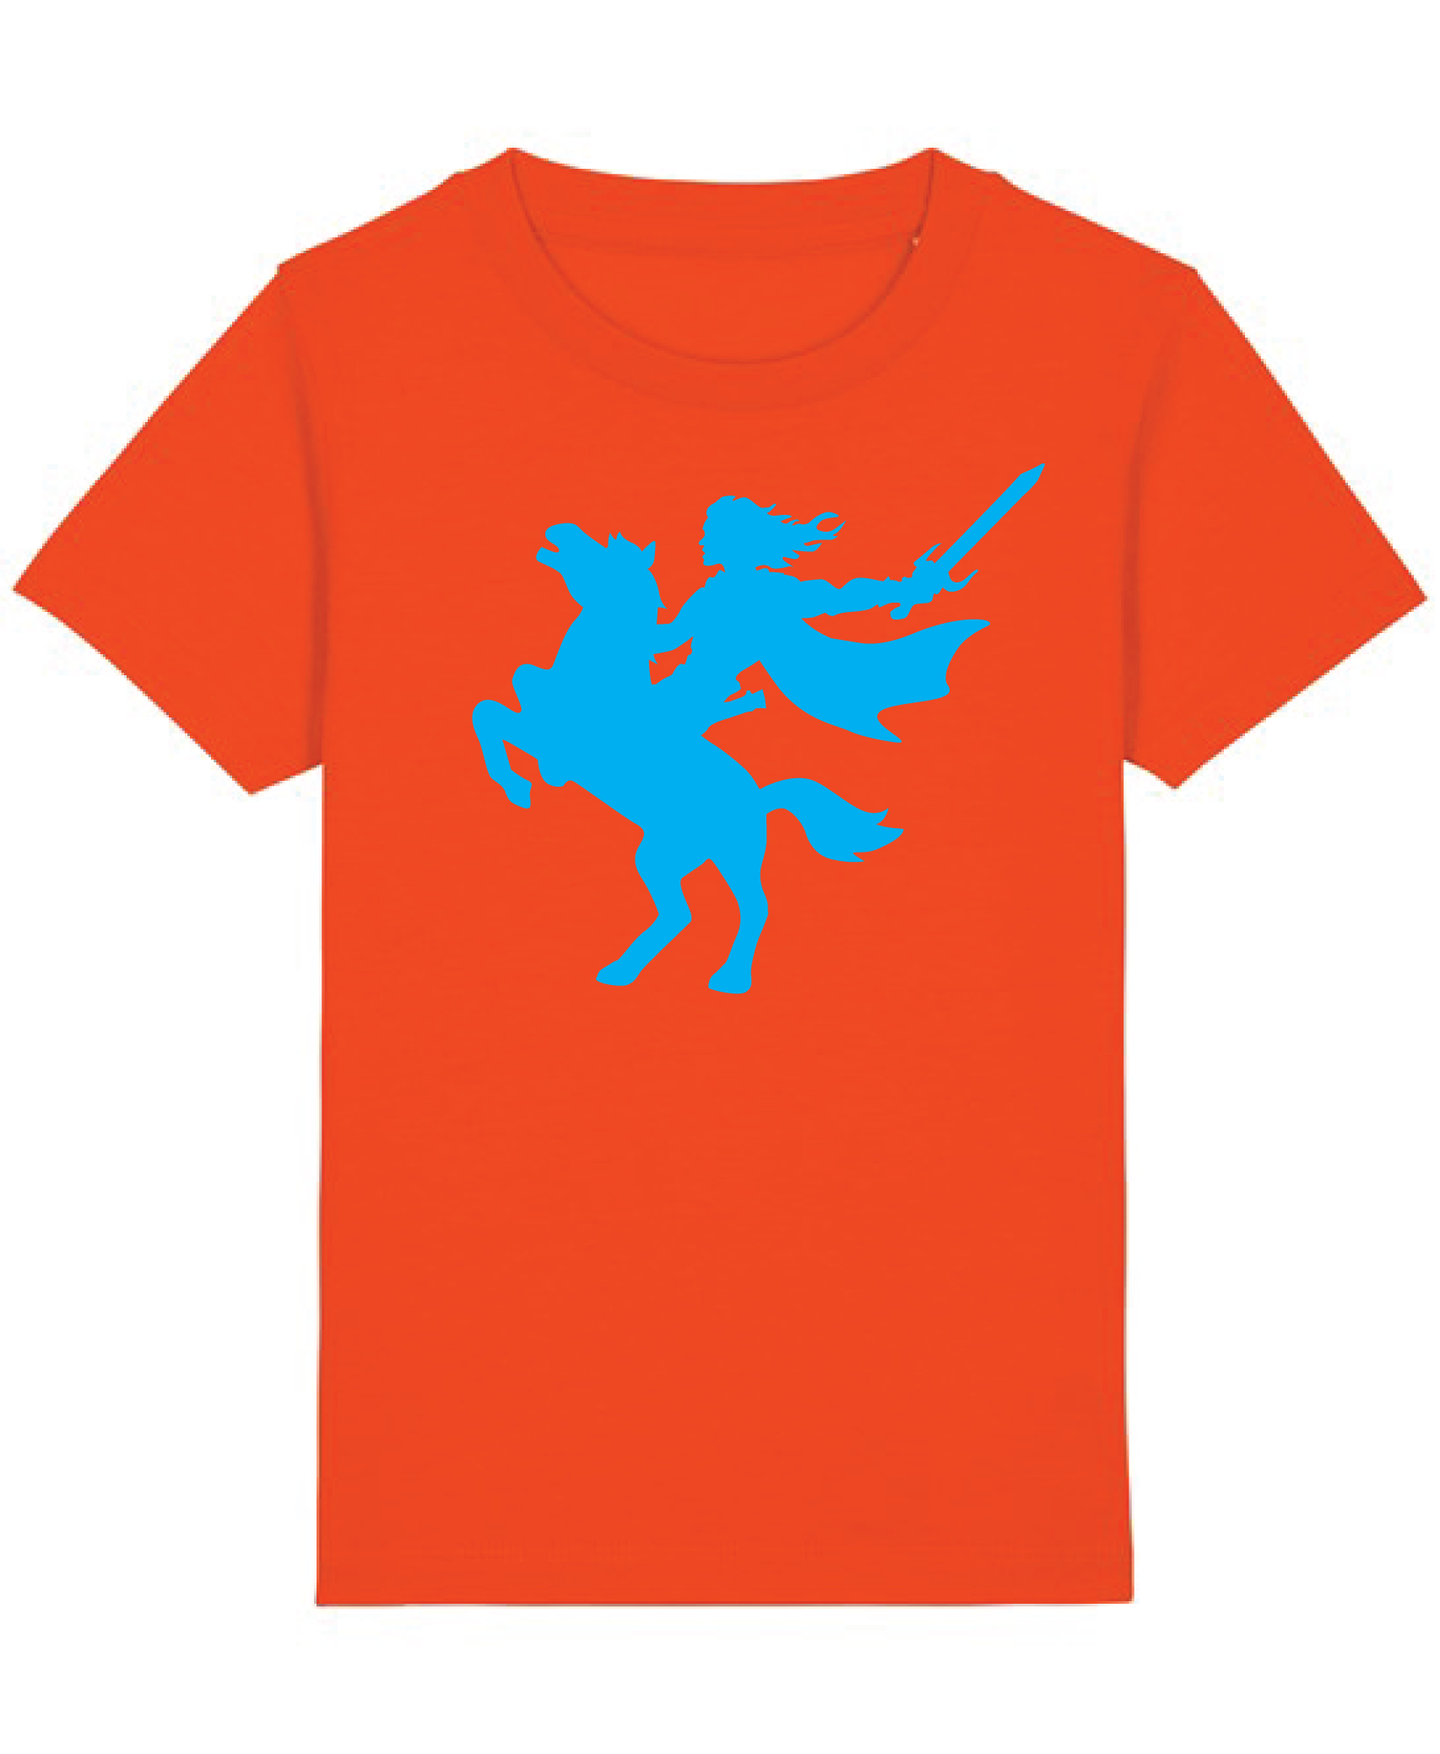 Boys New Tangerine Organic tee shirt with Finn flock print